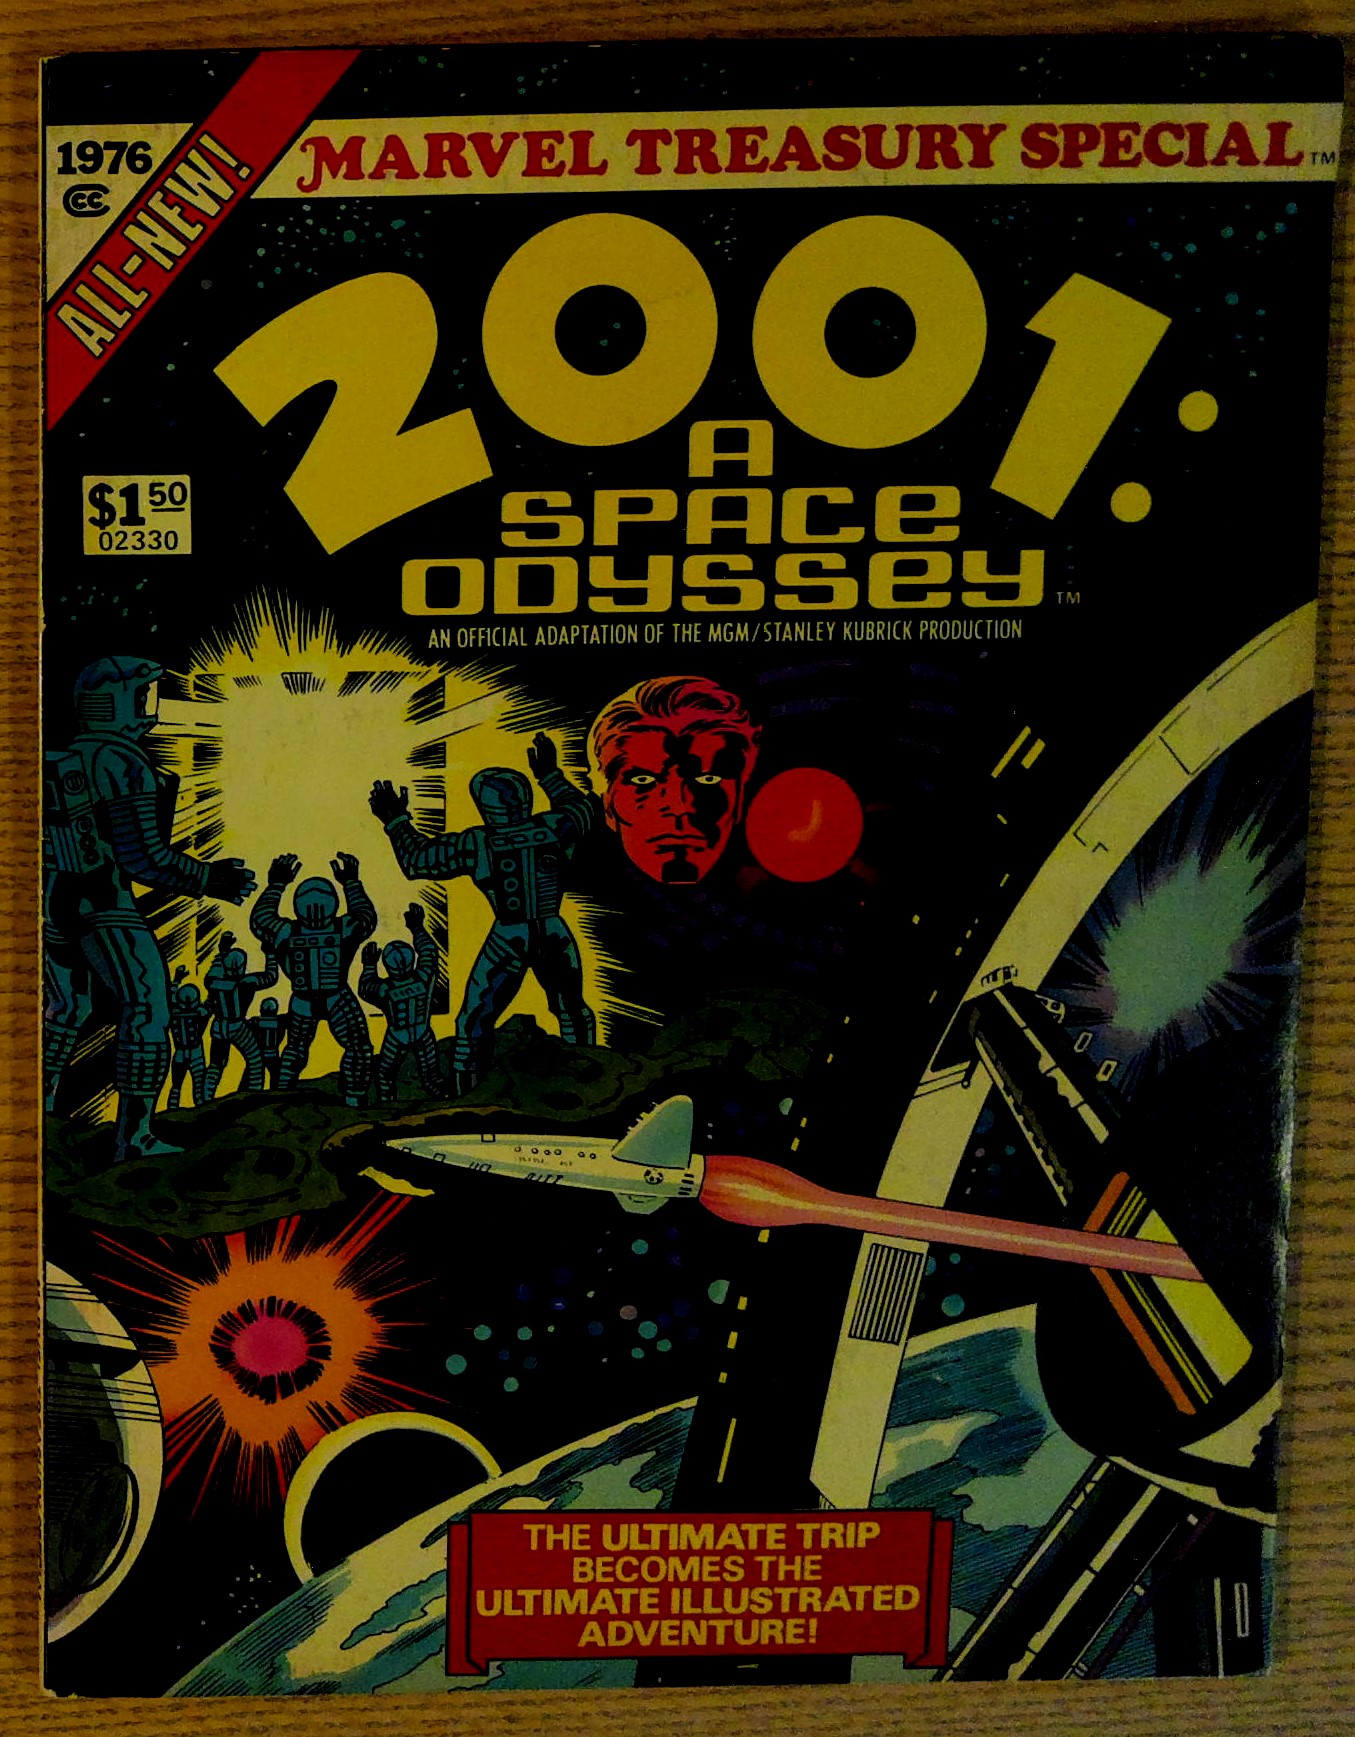 Marvel Treasury Special - 2001: A Space Odyssey